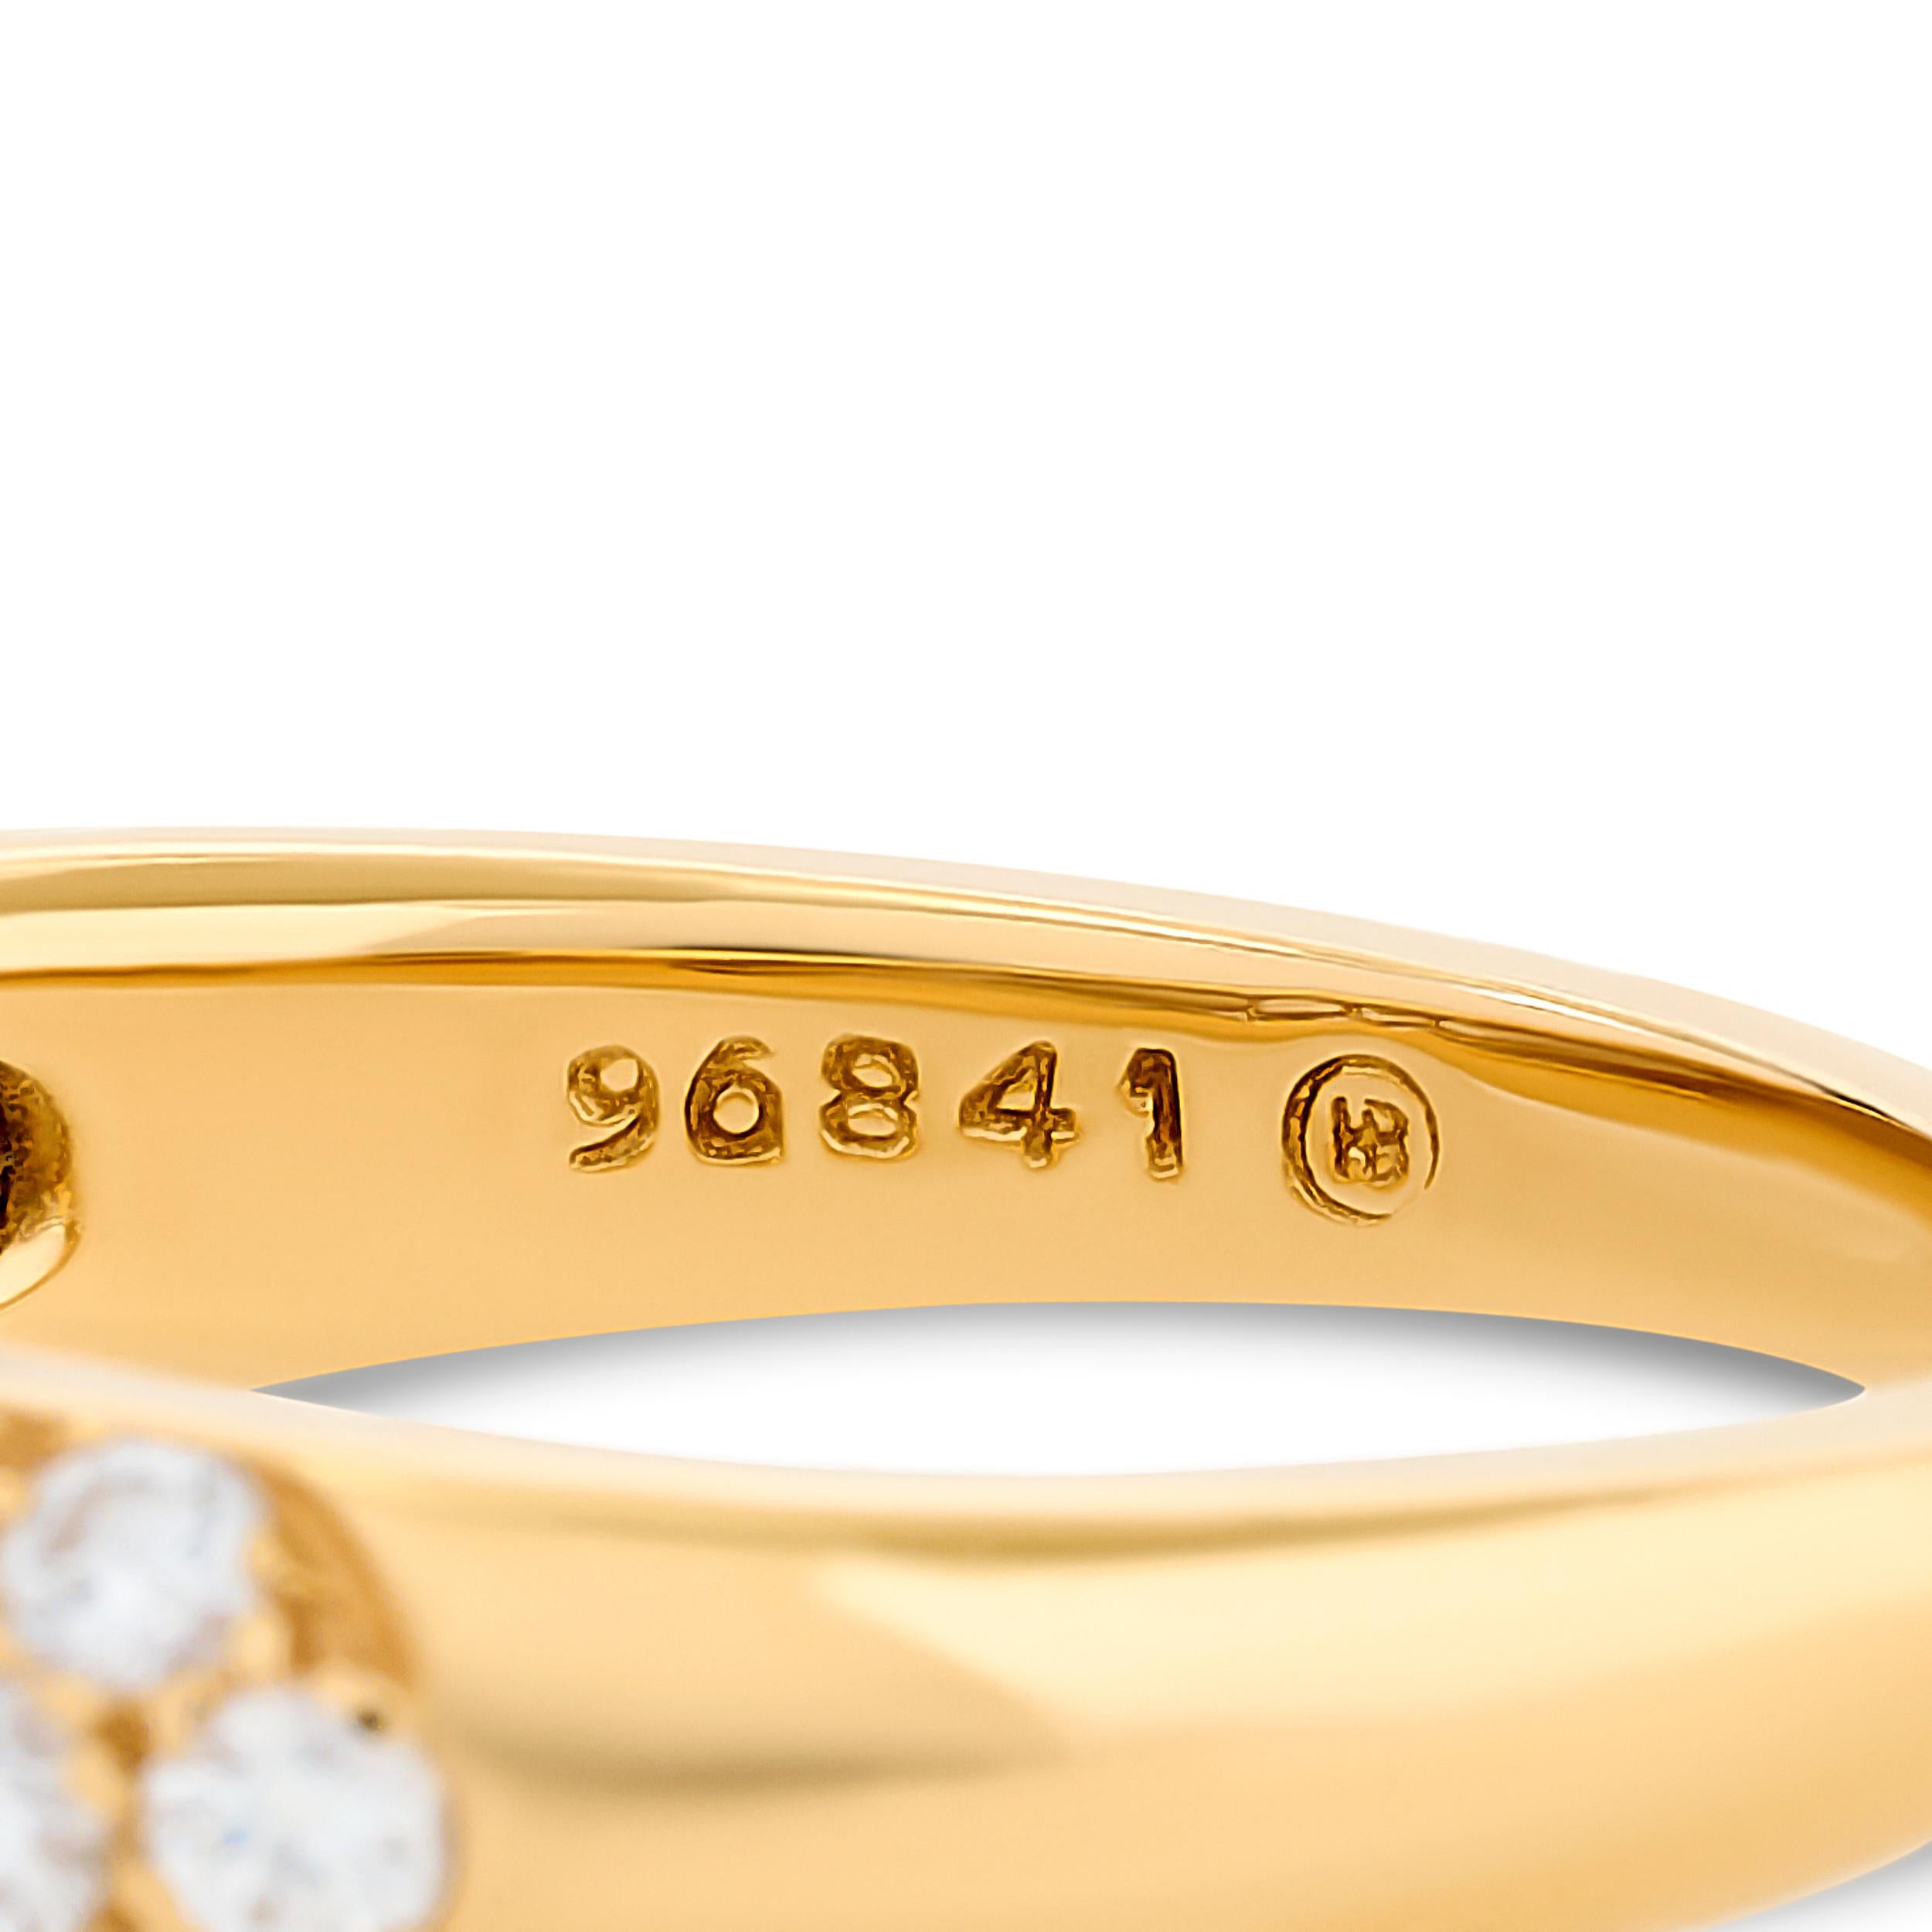 Oscar Heyman 18 Karat Yellow Gold Diamond Dome Ring In Good Condition For Sale In Philadelphia, PA